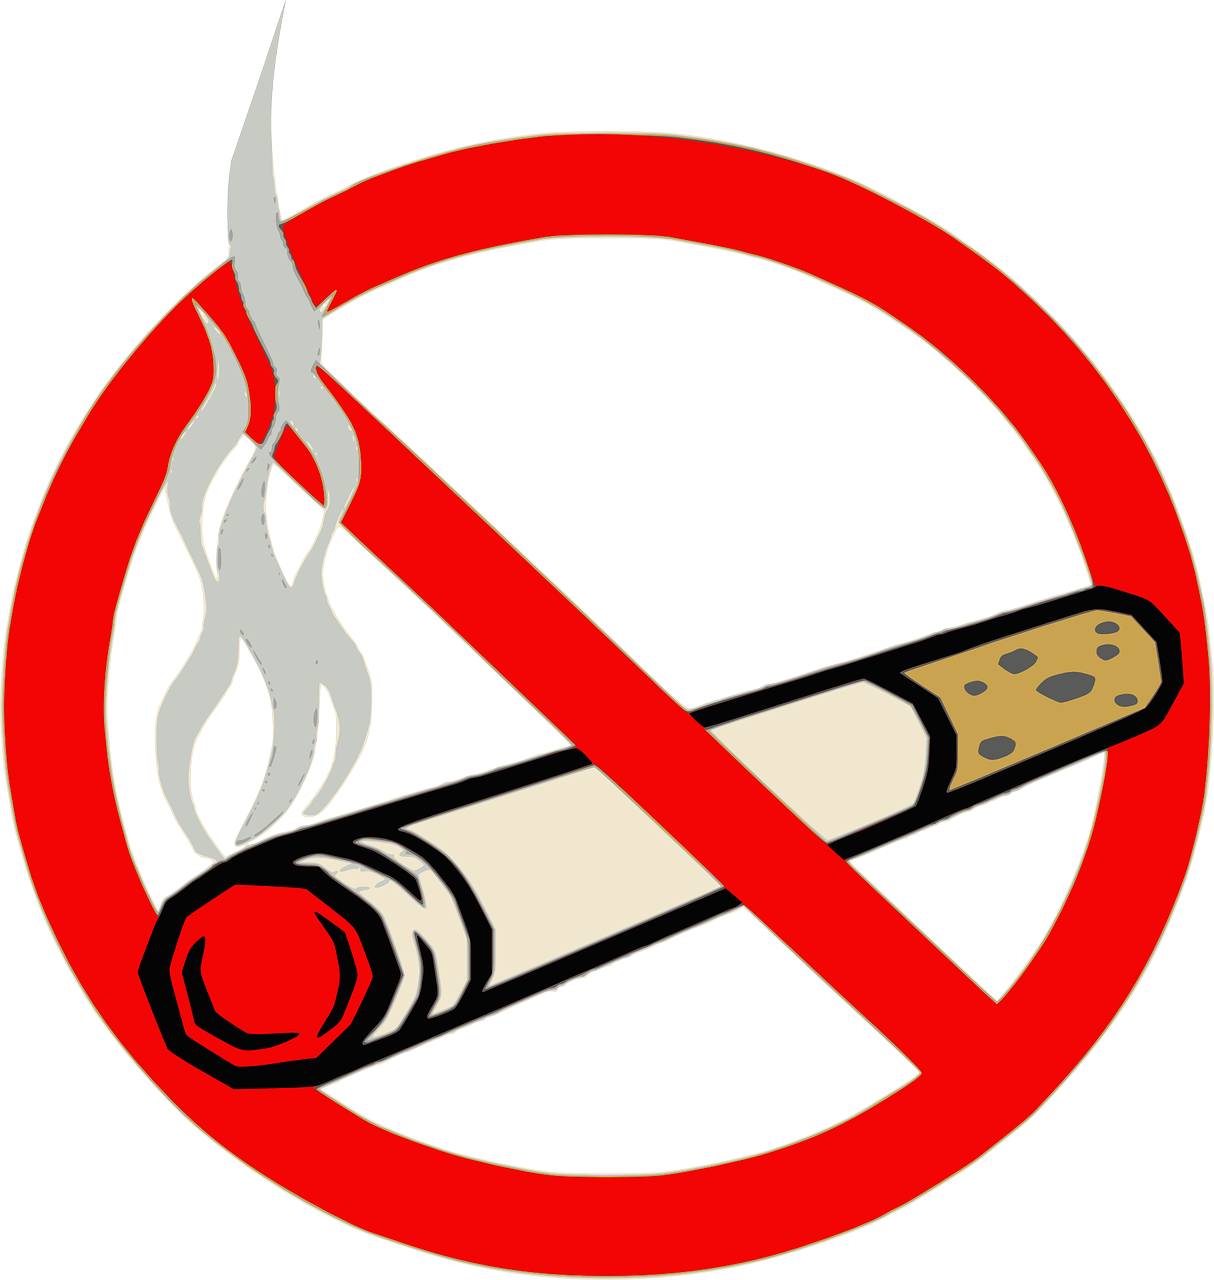 No Smoking Ban Cigarettes Smoking Prohibited Free Image From Needpix